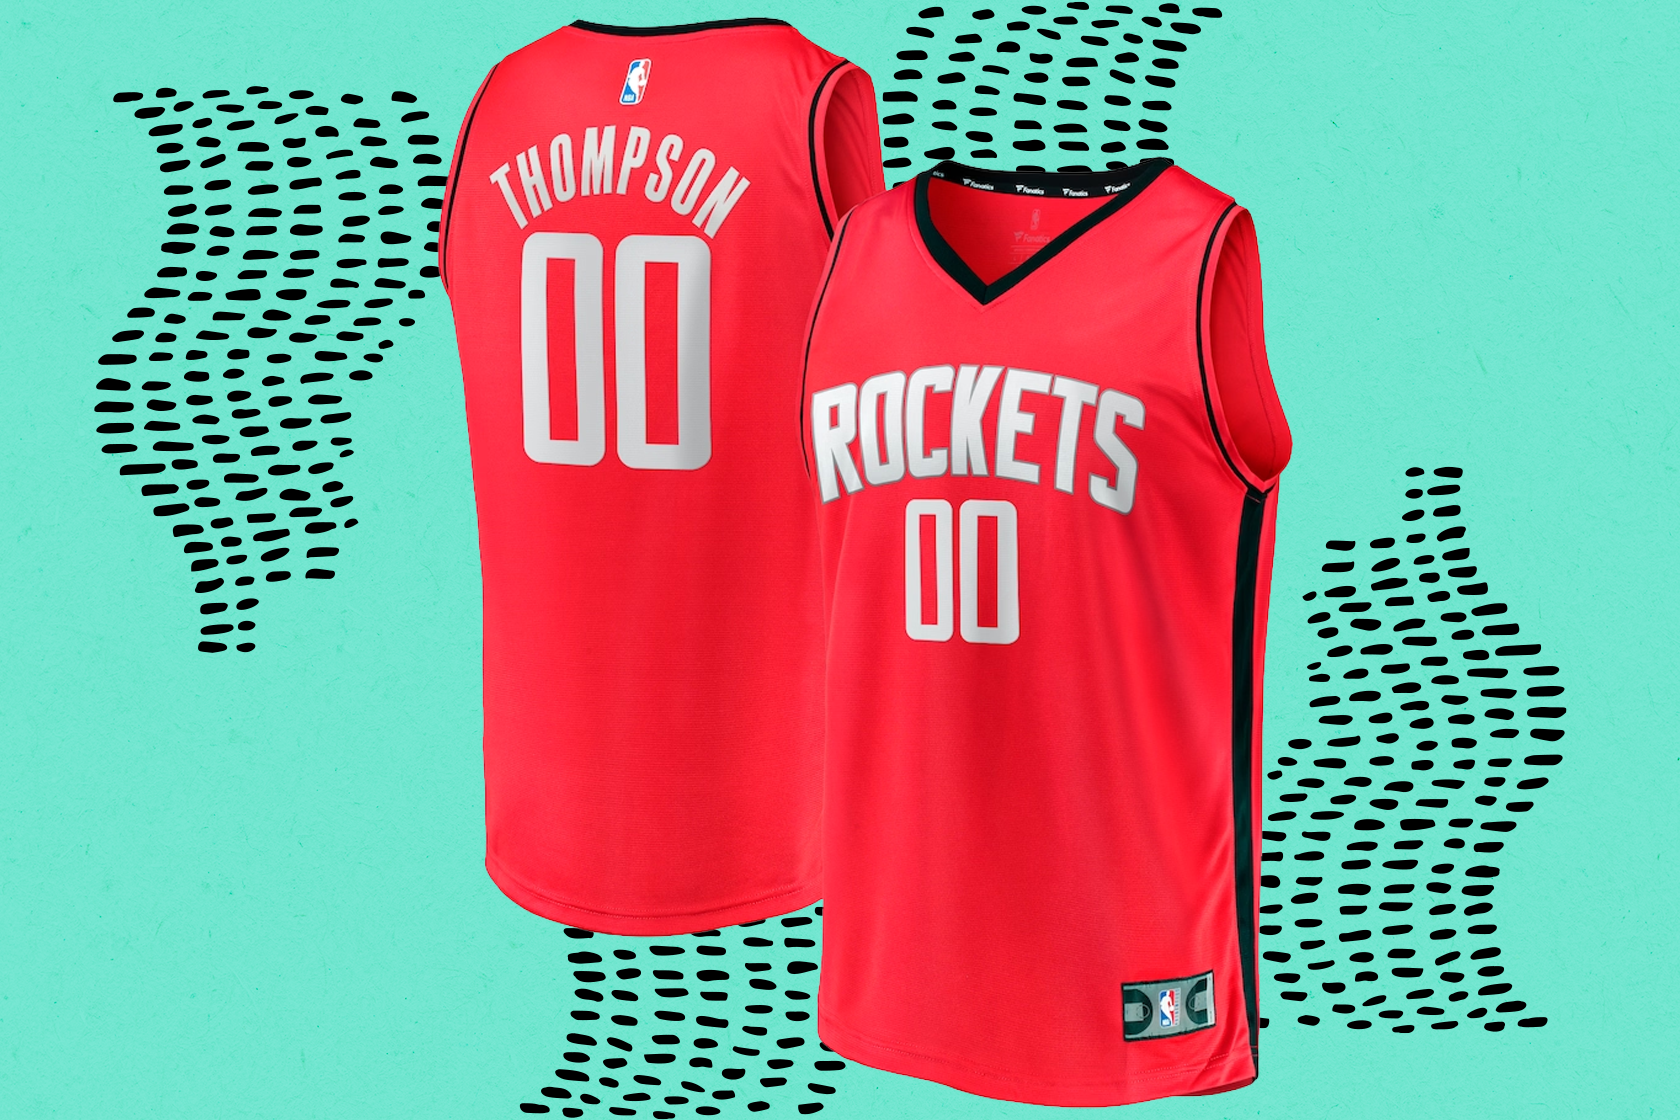 You can already pre-order Amen Thompson Rockets jerseys at Fanatics